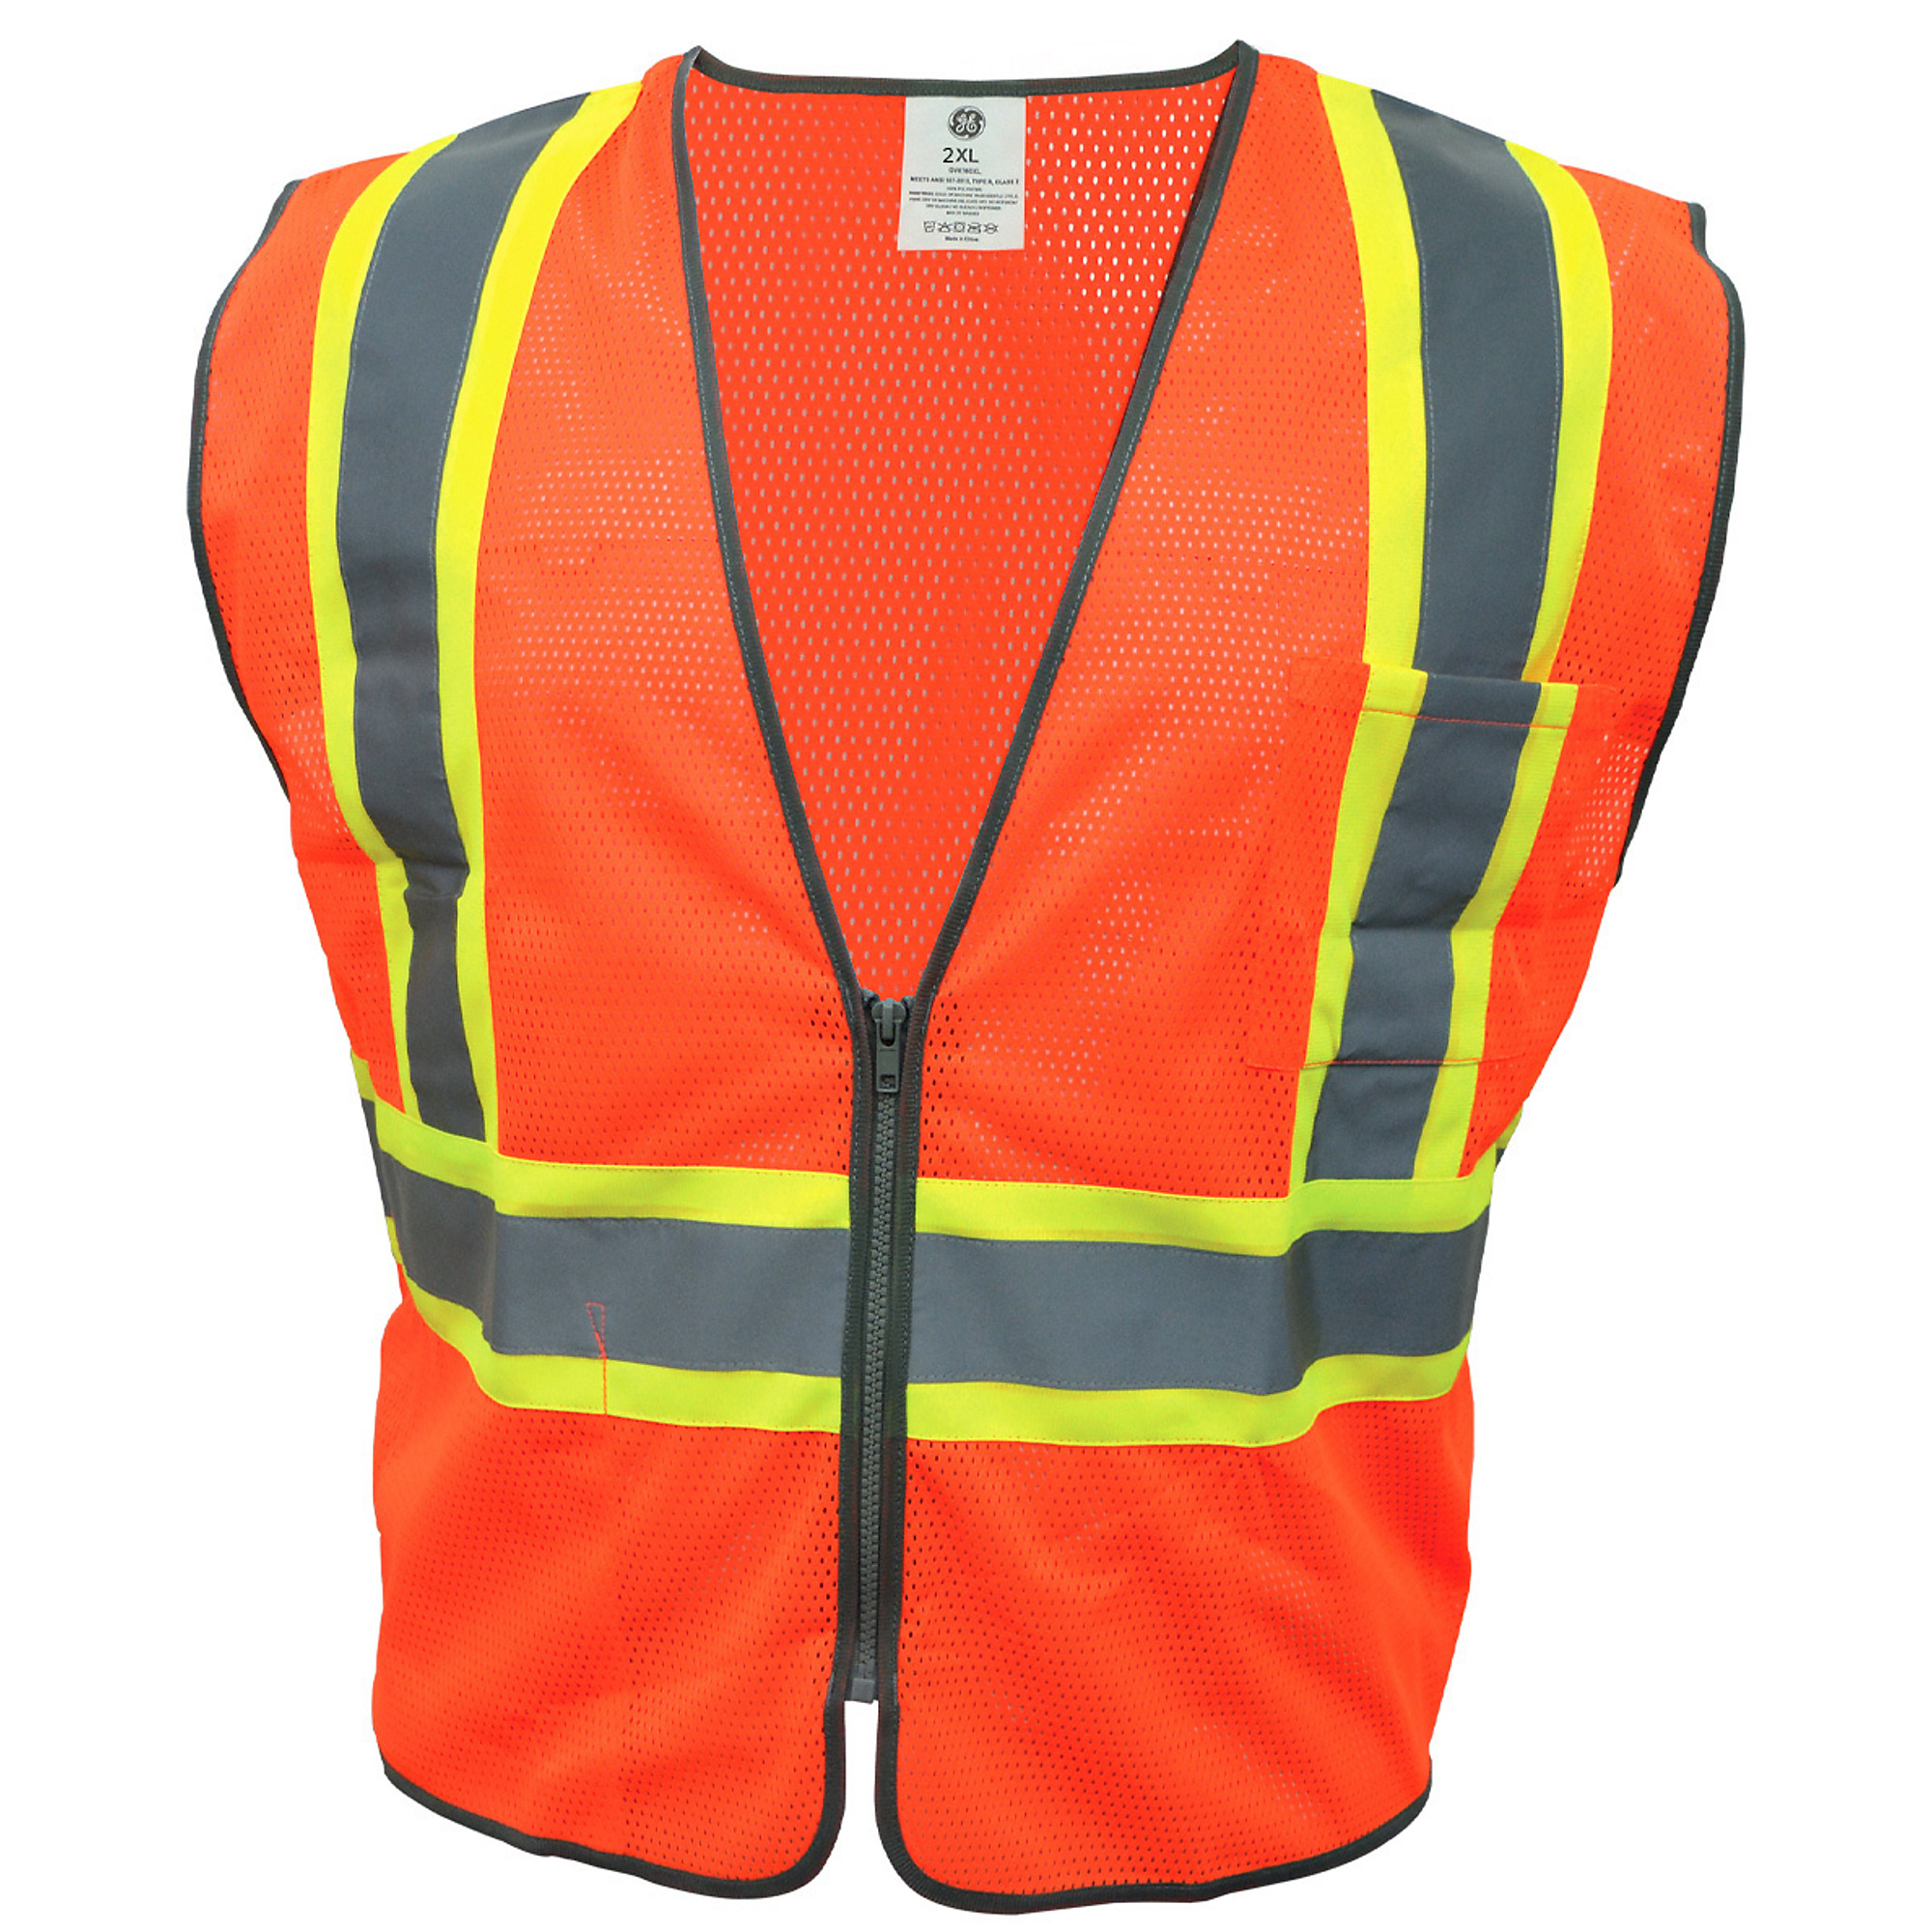 General Electric, Safety Vest w/Contrast Trims - 2 Pocket Orange 2XL, Size 2XL, Color Orange, Model GV078O2XL